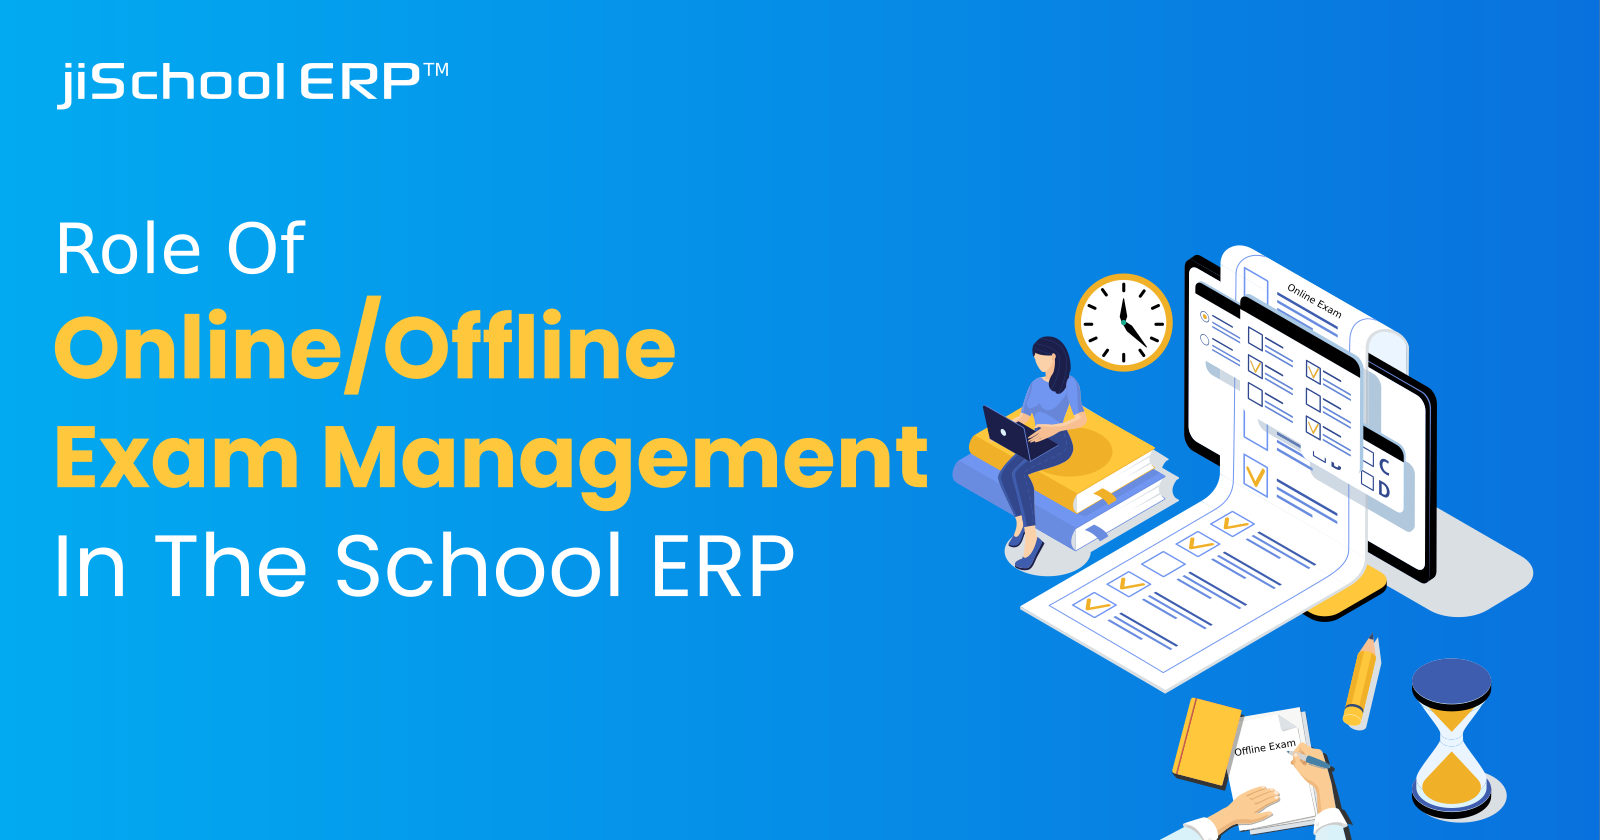 The Role Of Online/Offline Exam Management In The School ERP